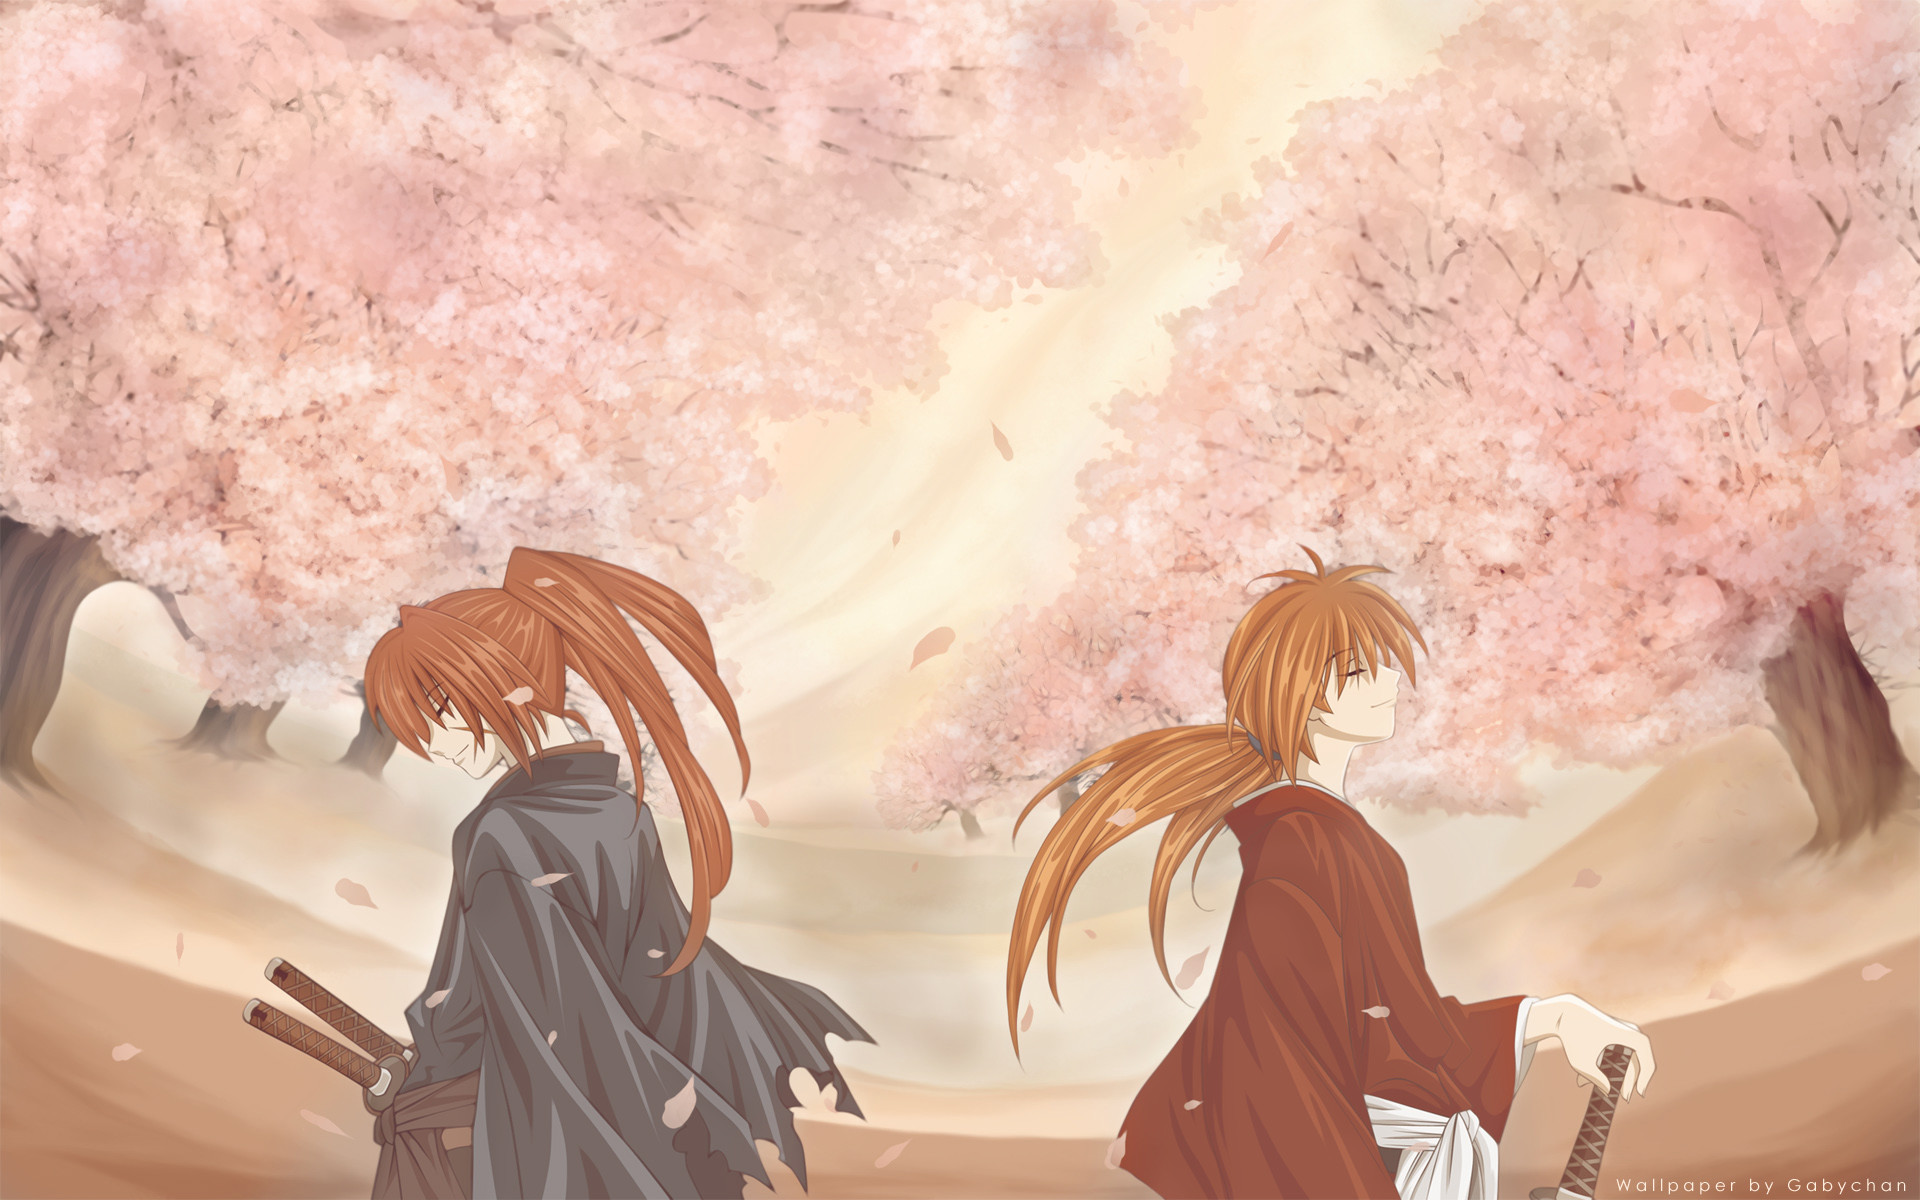 Wallpaper ID 442793  Anime Rurouni Kenshin Phone Wallpaper  750x1334  free download